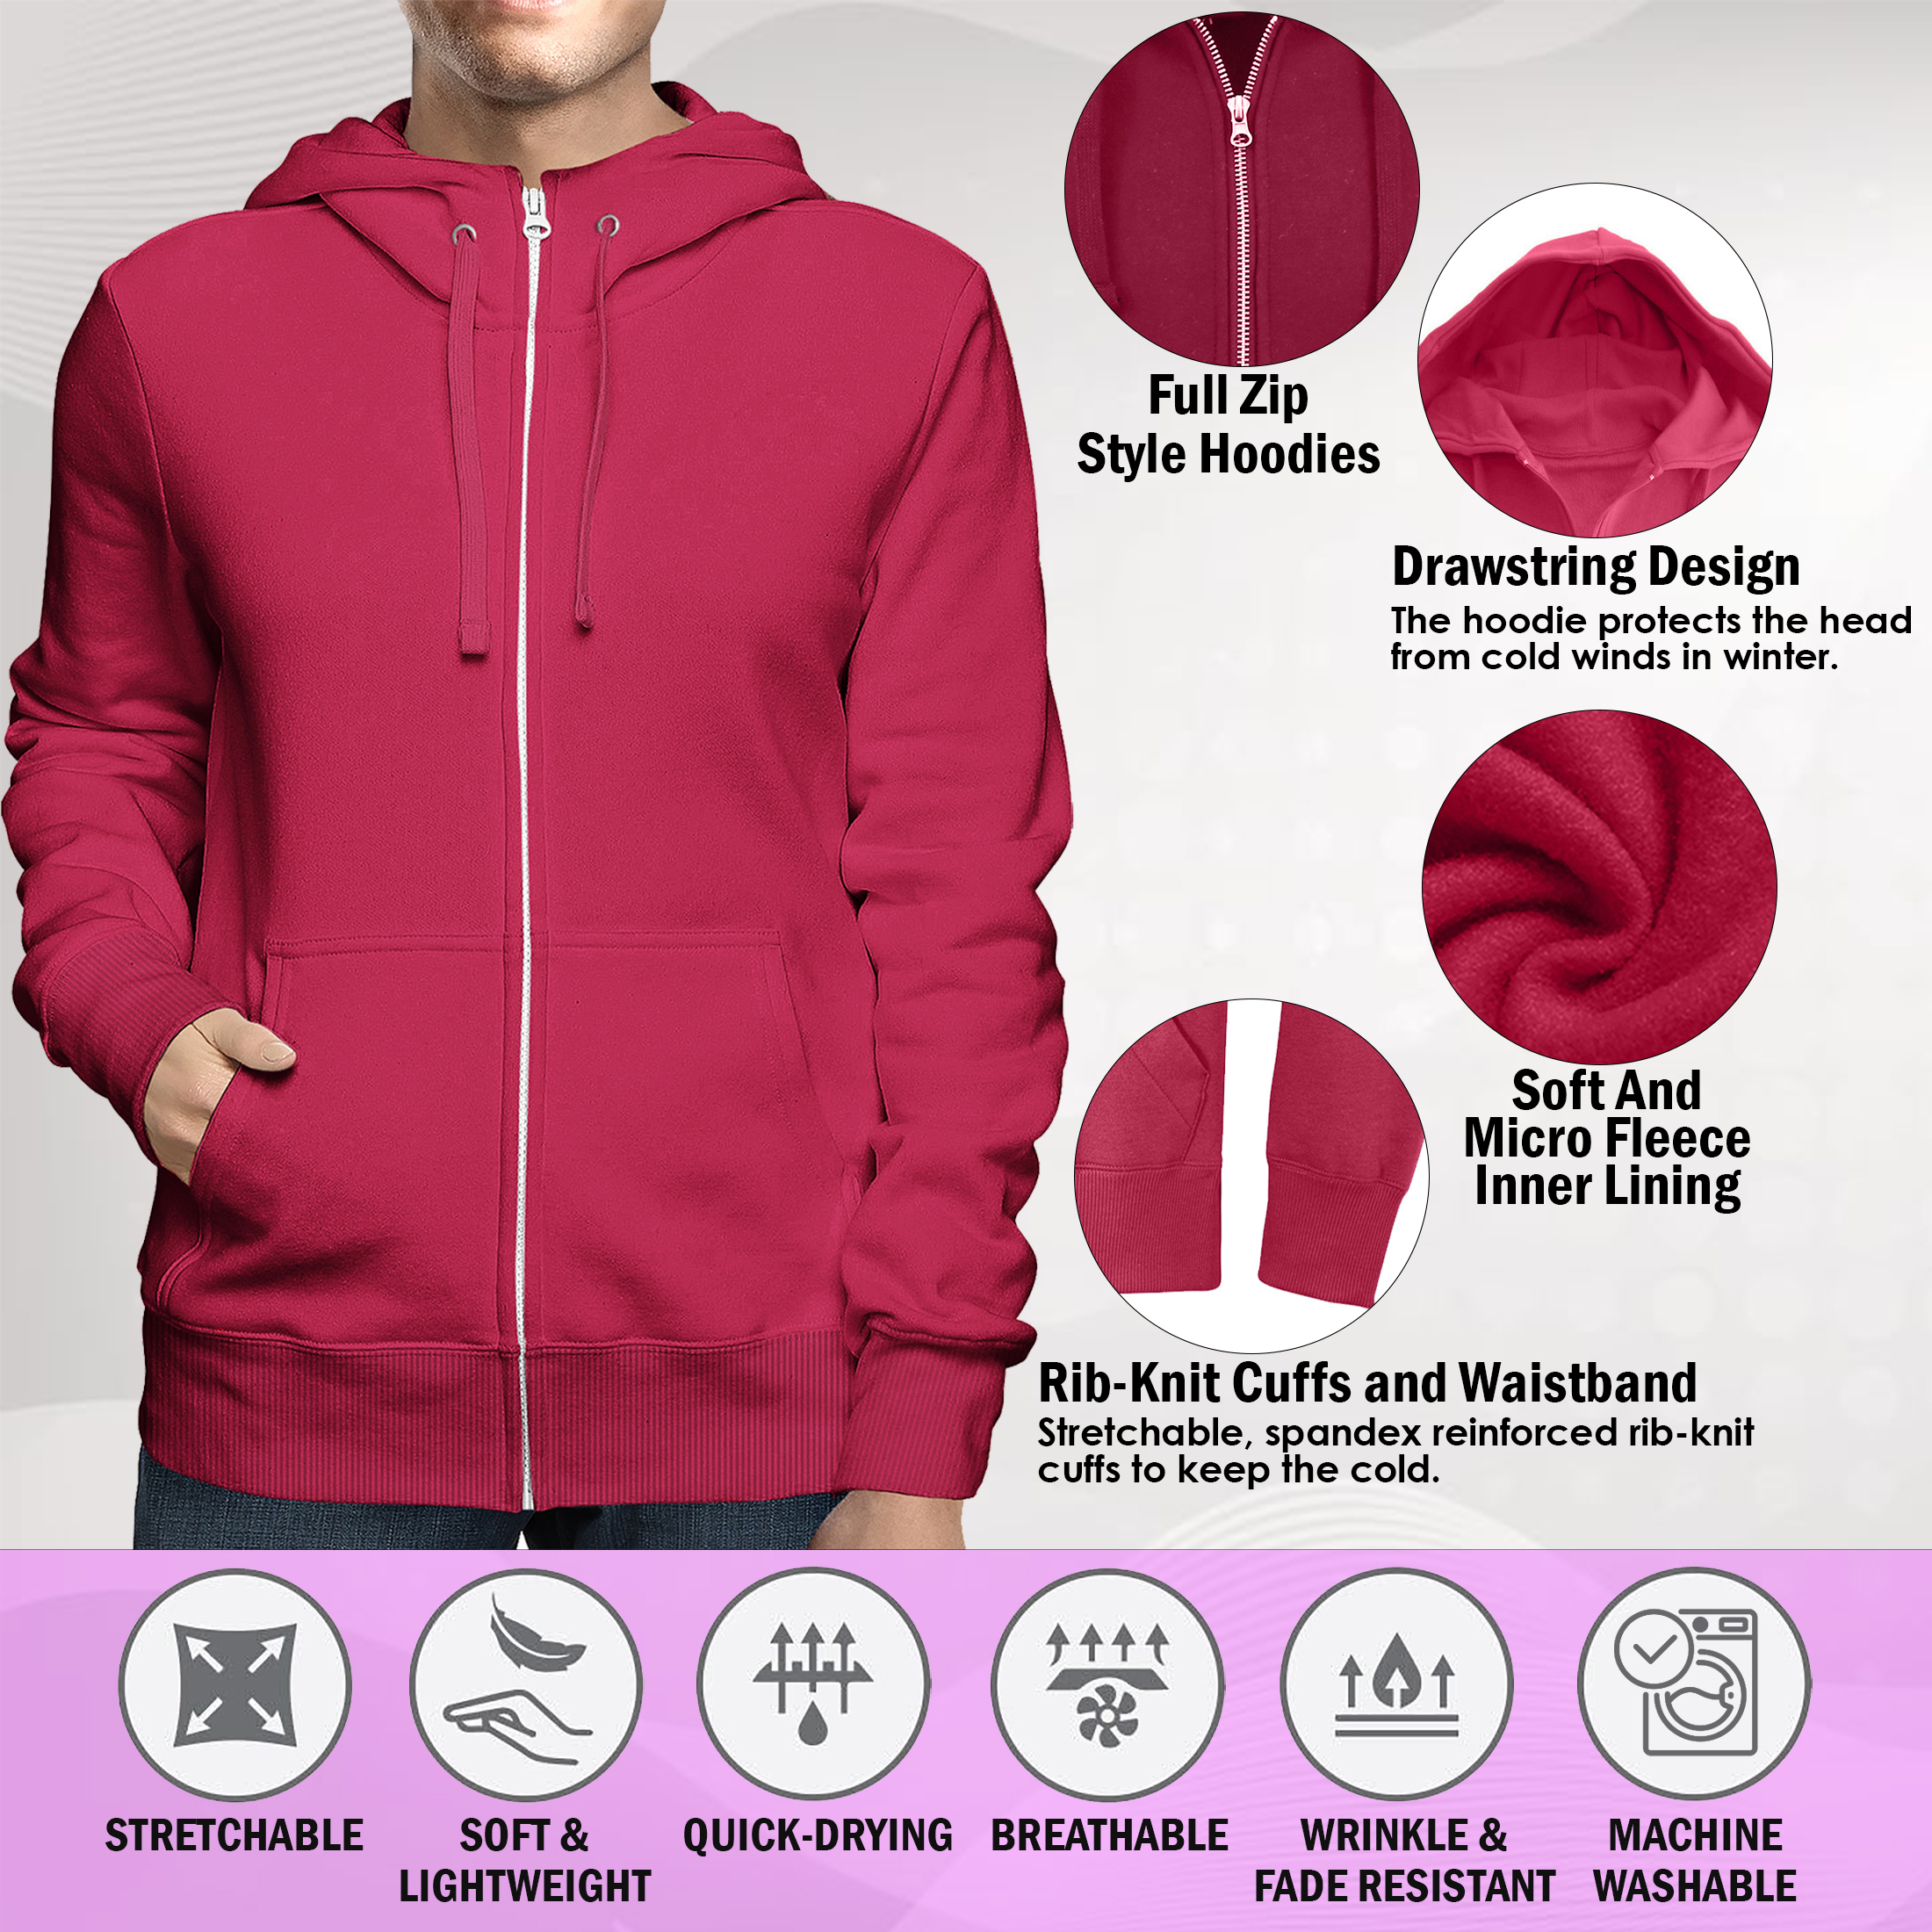 2-Pack: Men's Full Zip Up Fleece-Lined Hoodie Sweatshirt (Big & Tall Size Available) - Gray & Timberland, Medium